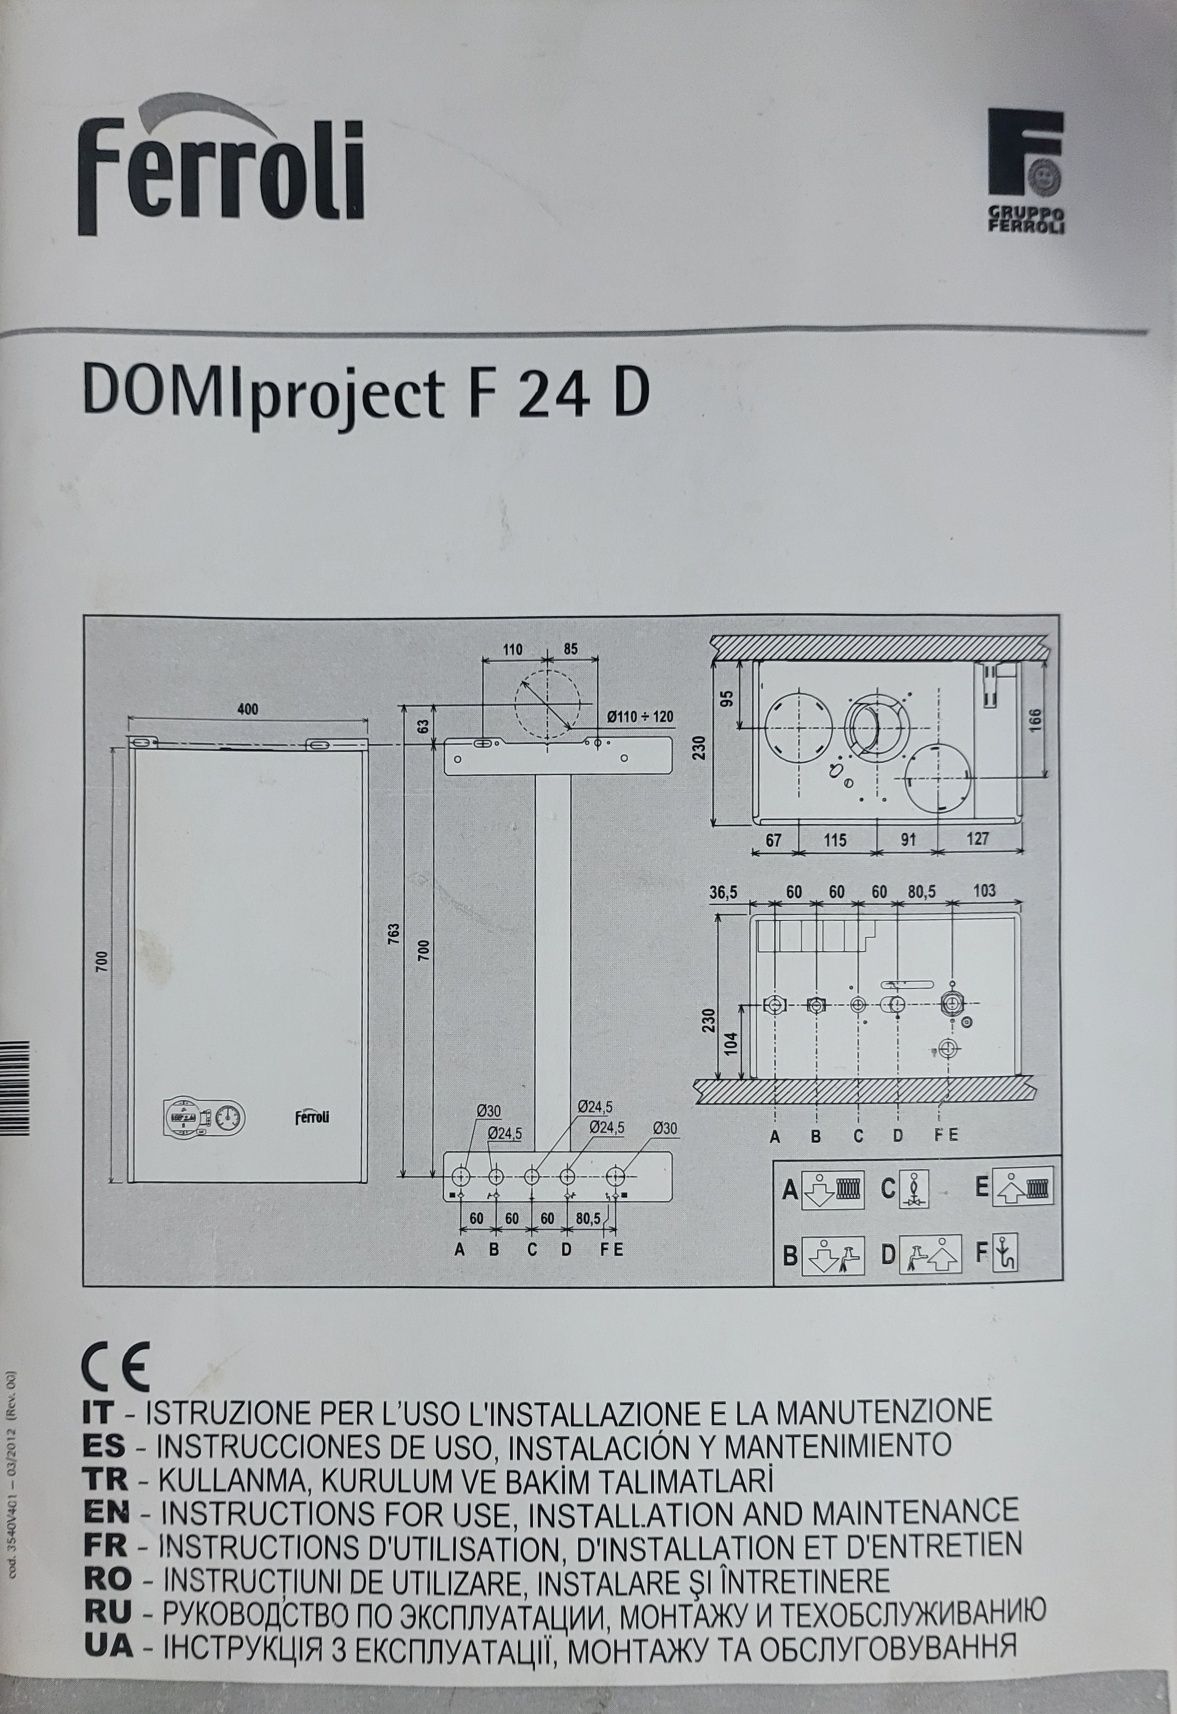 Piese centrala Ferolli Domiproject F24 D